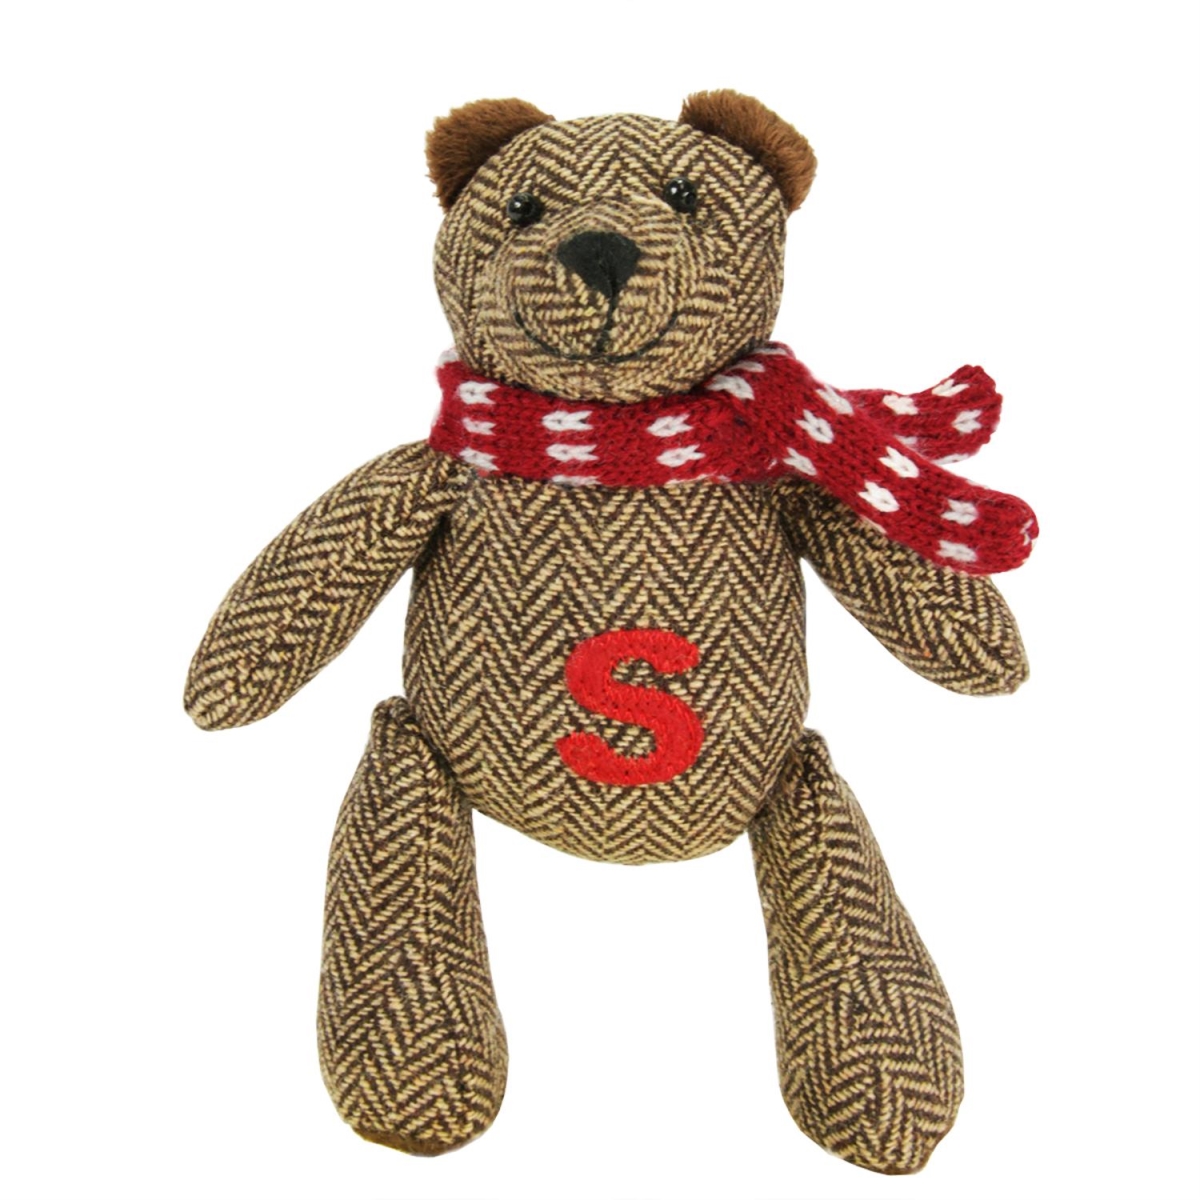 31350680 6.25 In. Brown Herringbone Plush Teddy Bear S Embroidered Christmas Figure Decoration